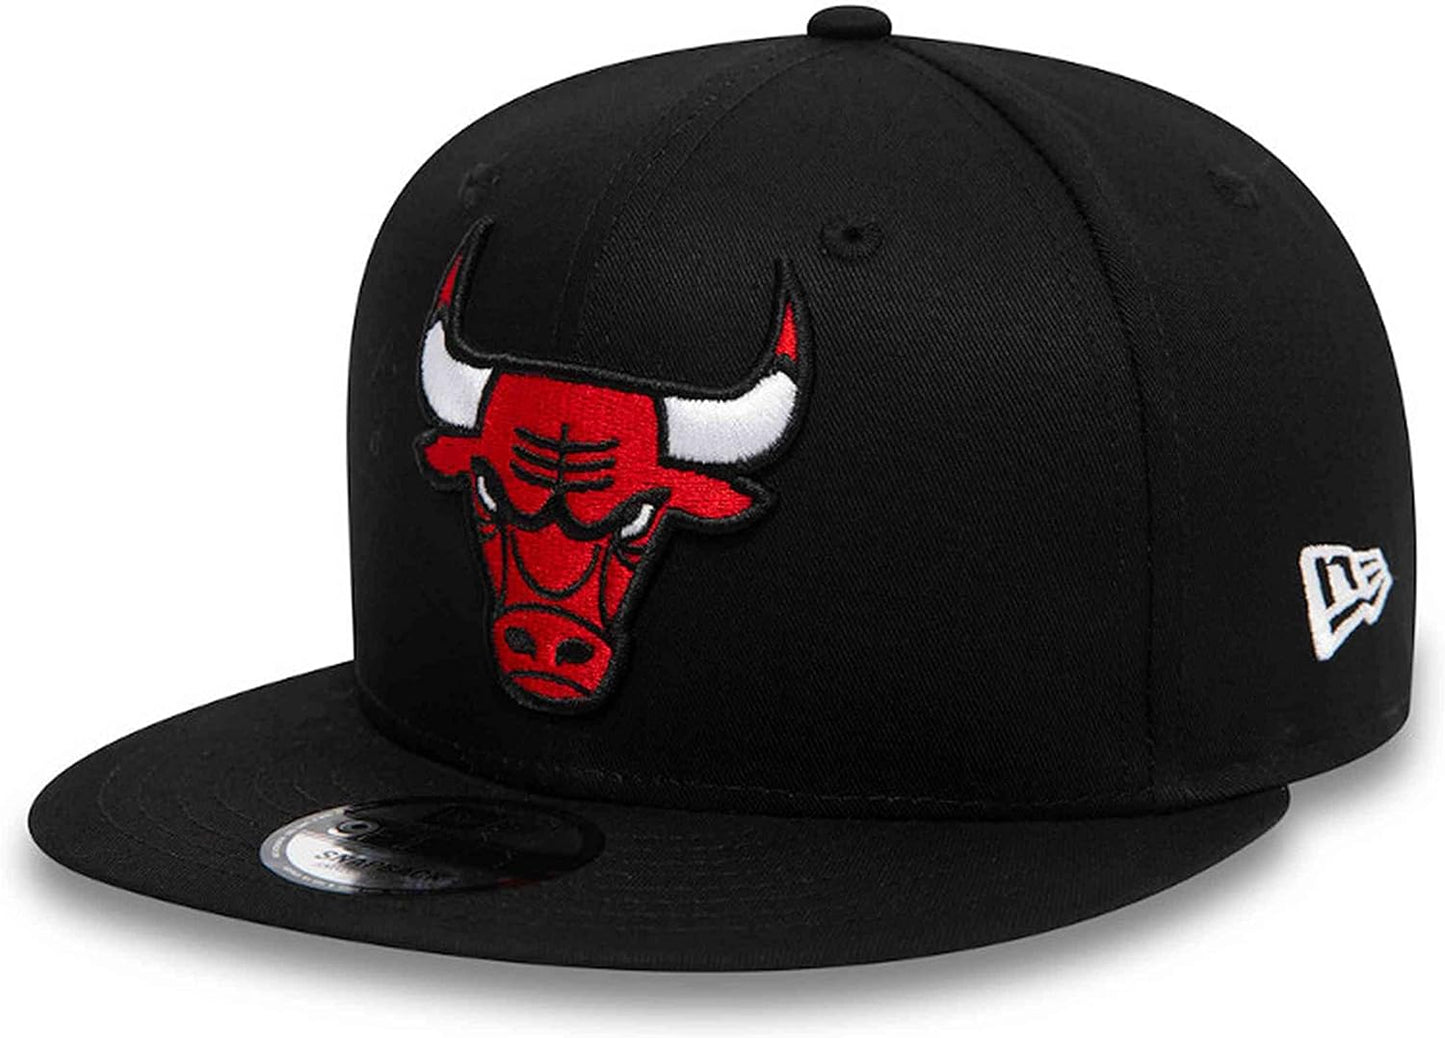 NEW ERA Chicago Bulls 9FIFTY Snapback Cap - Black/Team